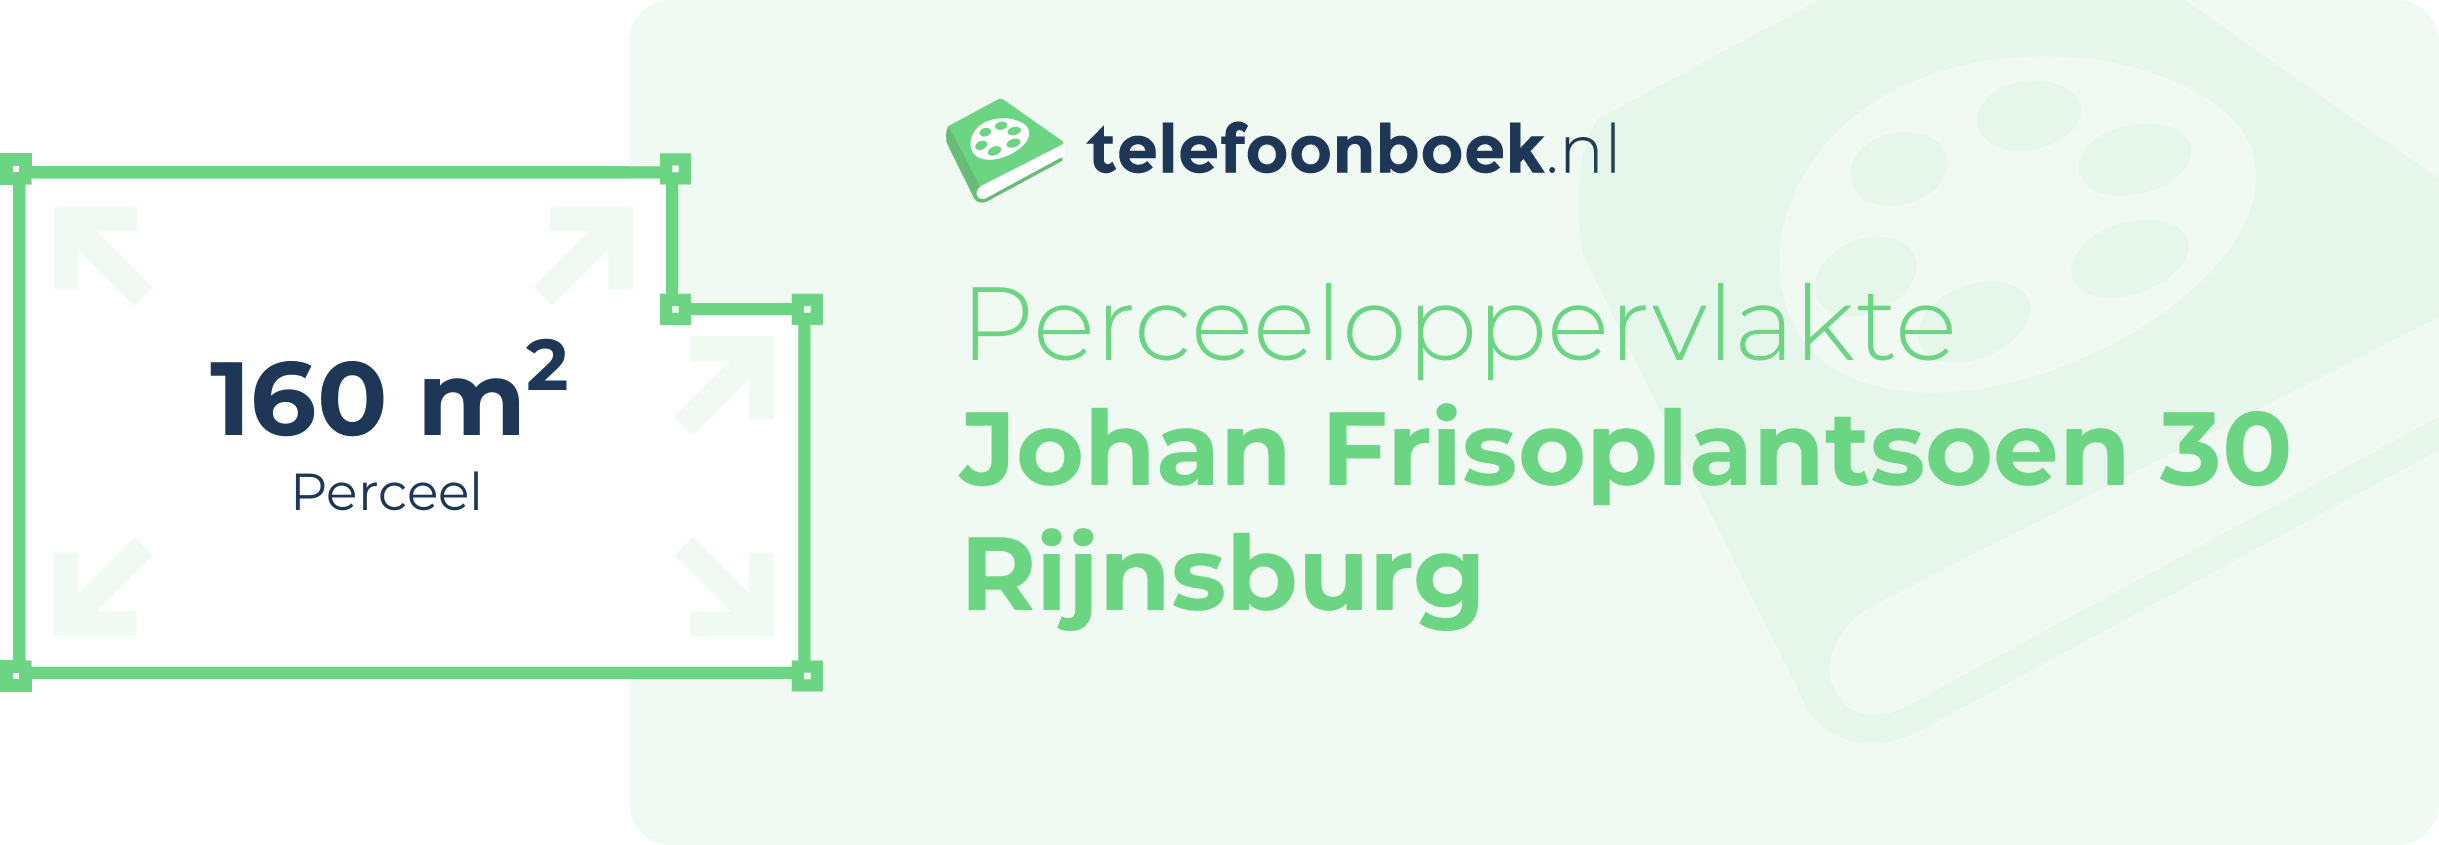 Perceeloppervlakte Johan Frisoplantsoen 30 Rijnsburg